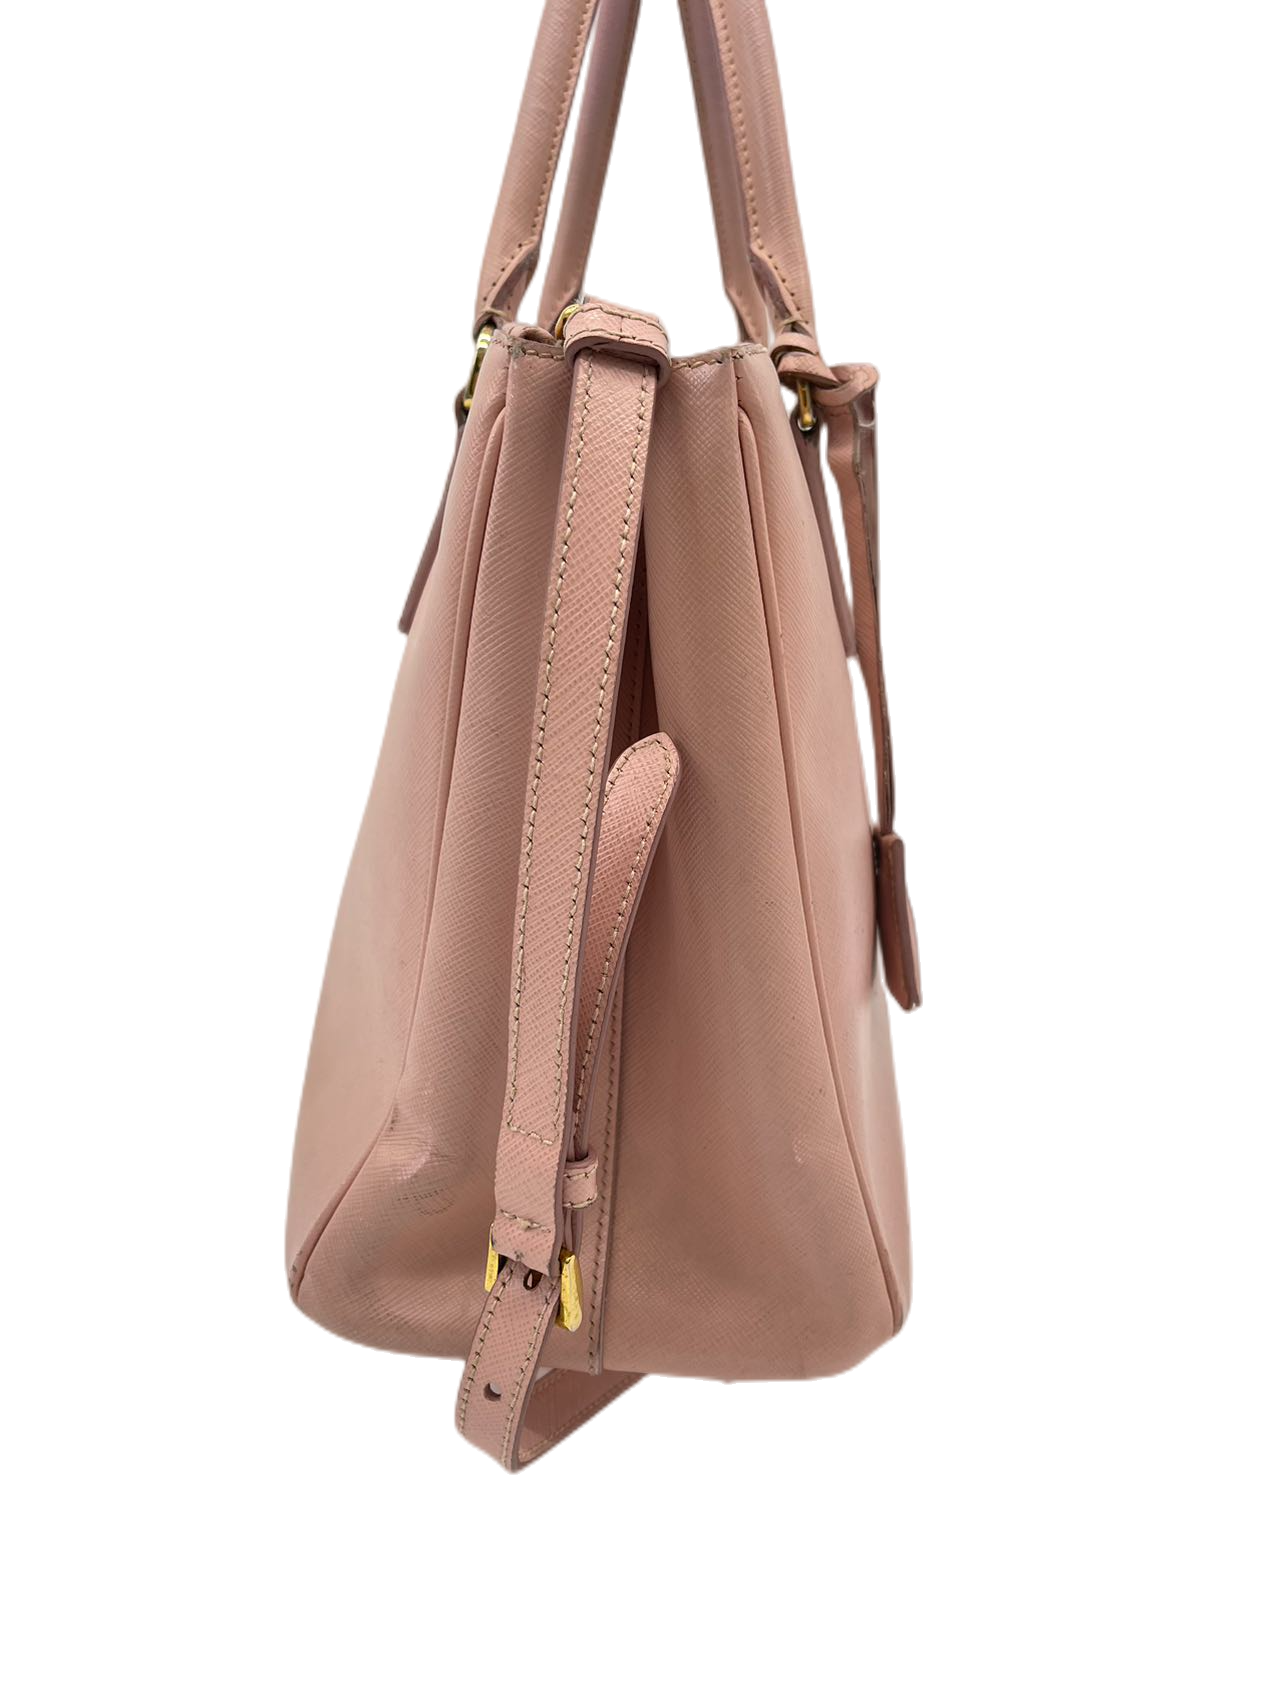 Preloved Prada Saffiano Lux Shoulder Bag Crossbody